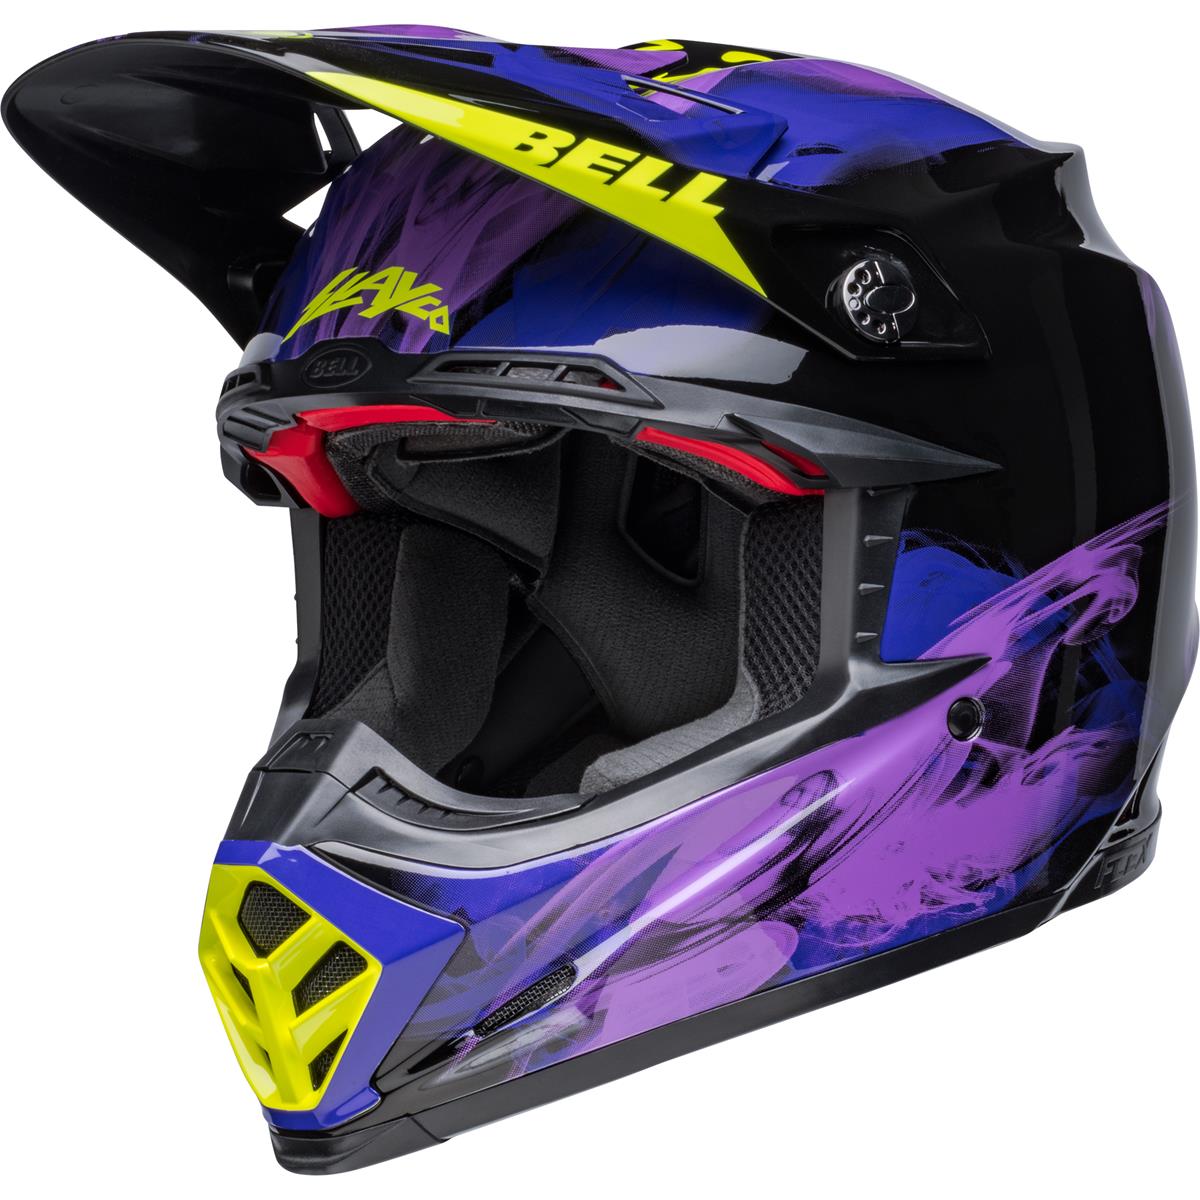 Visière BELL Moto-9S Flex Slayco noir/violet NEUF 